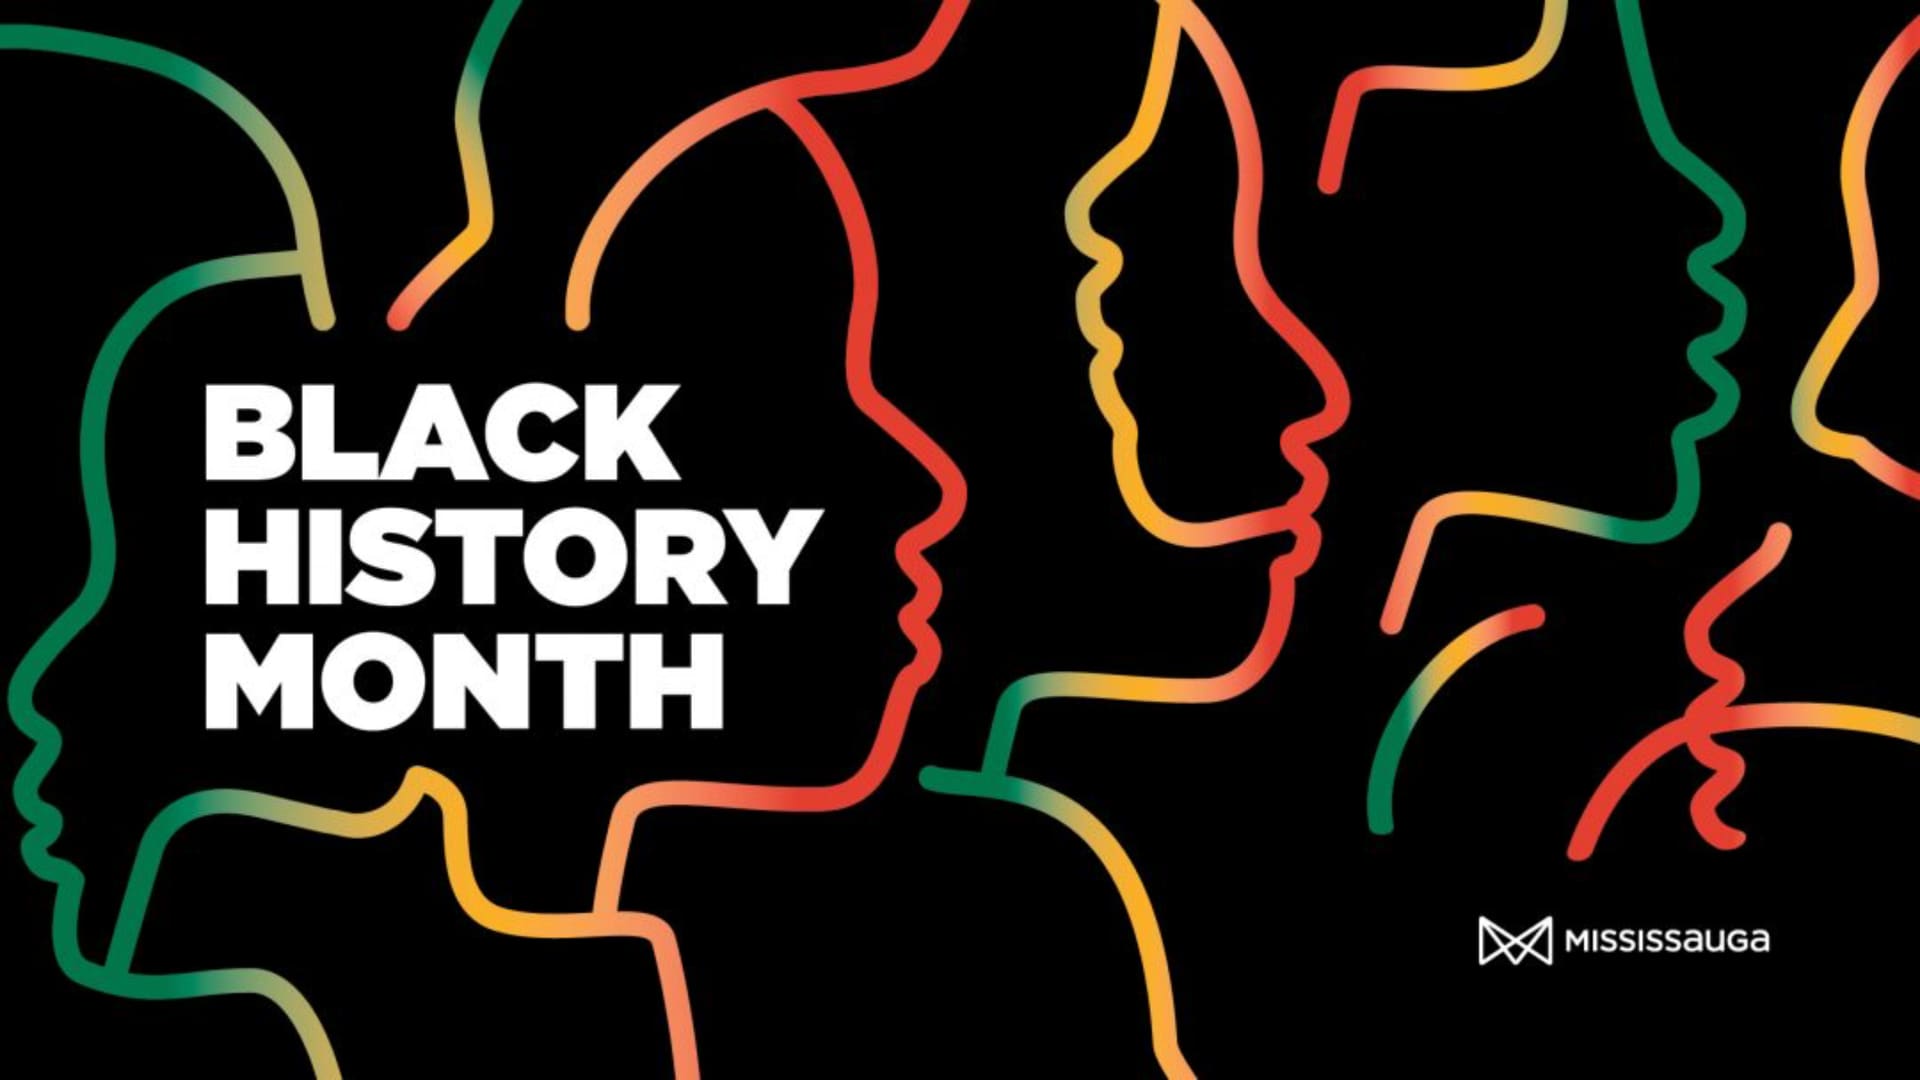 Mississauga recognizes Black History Month